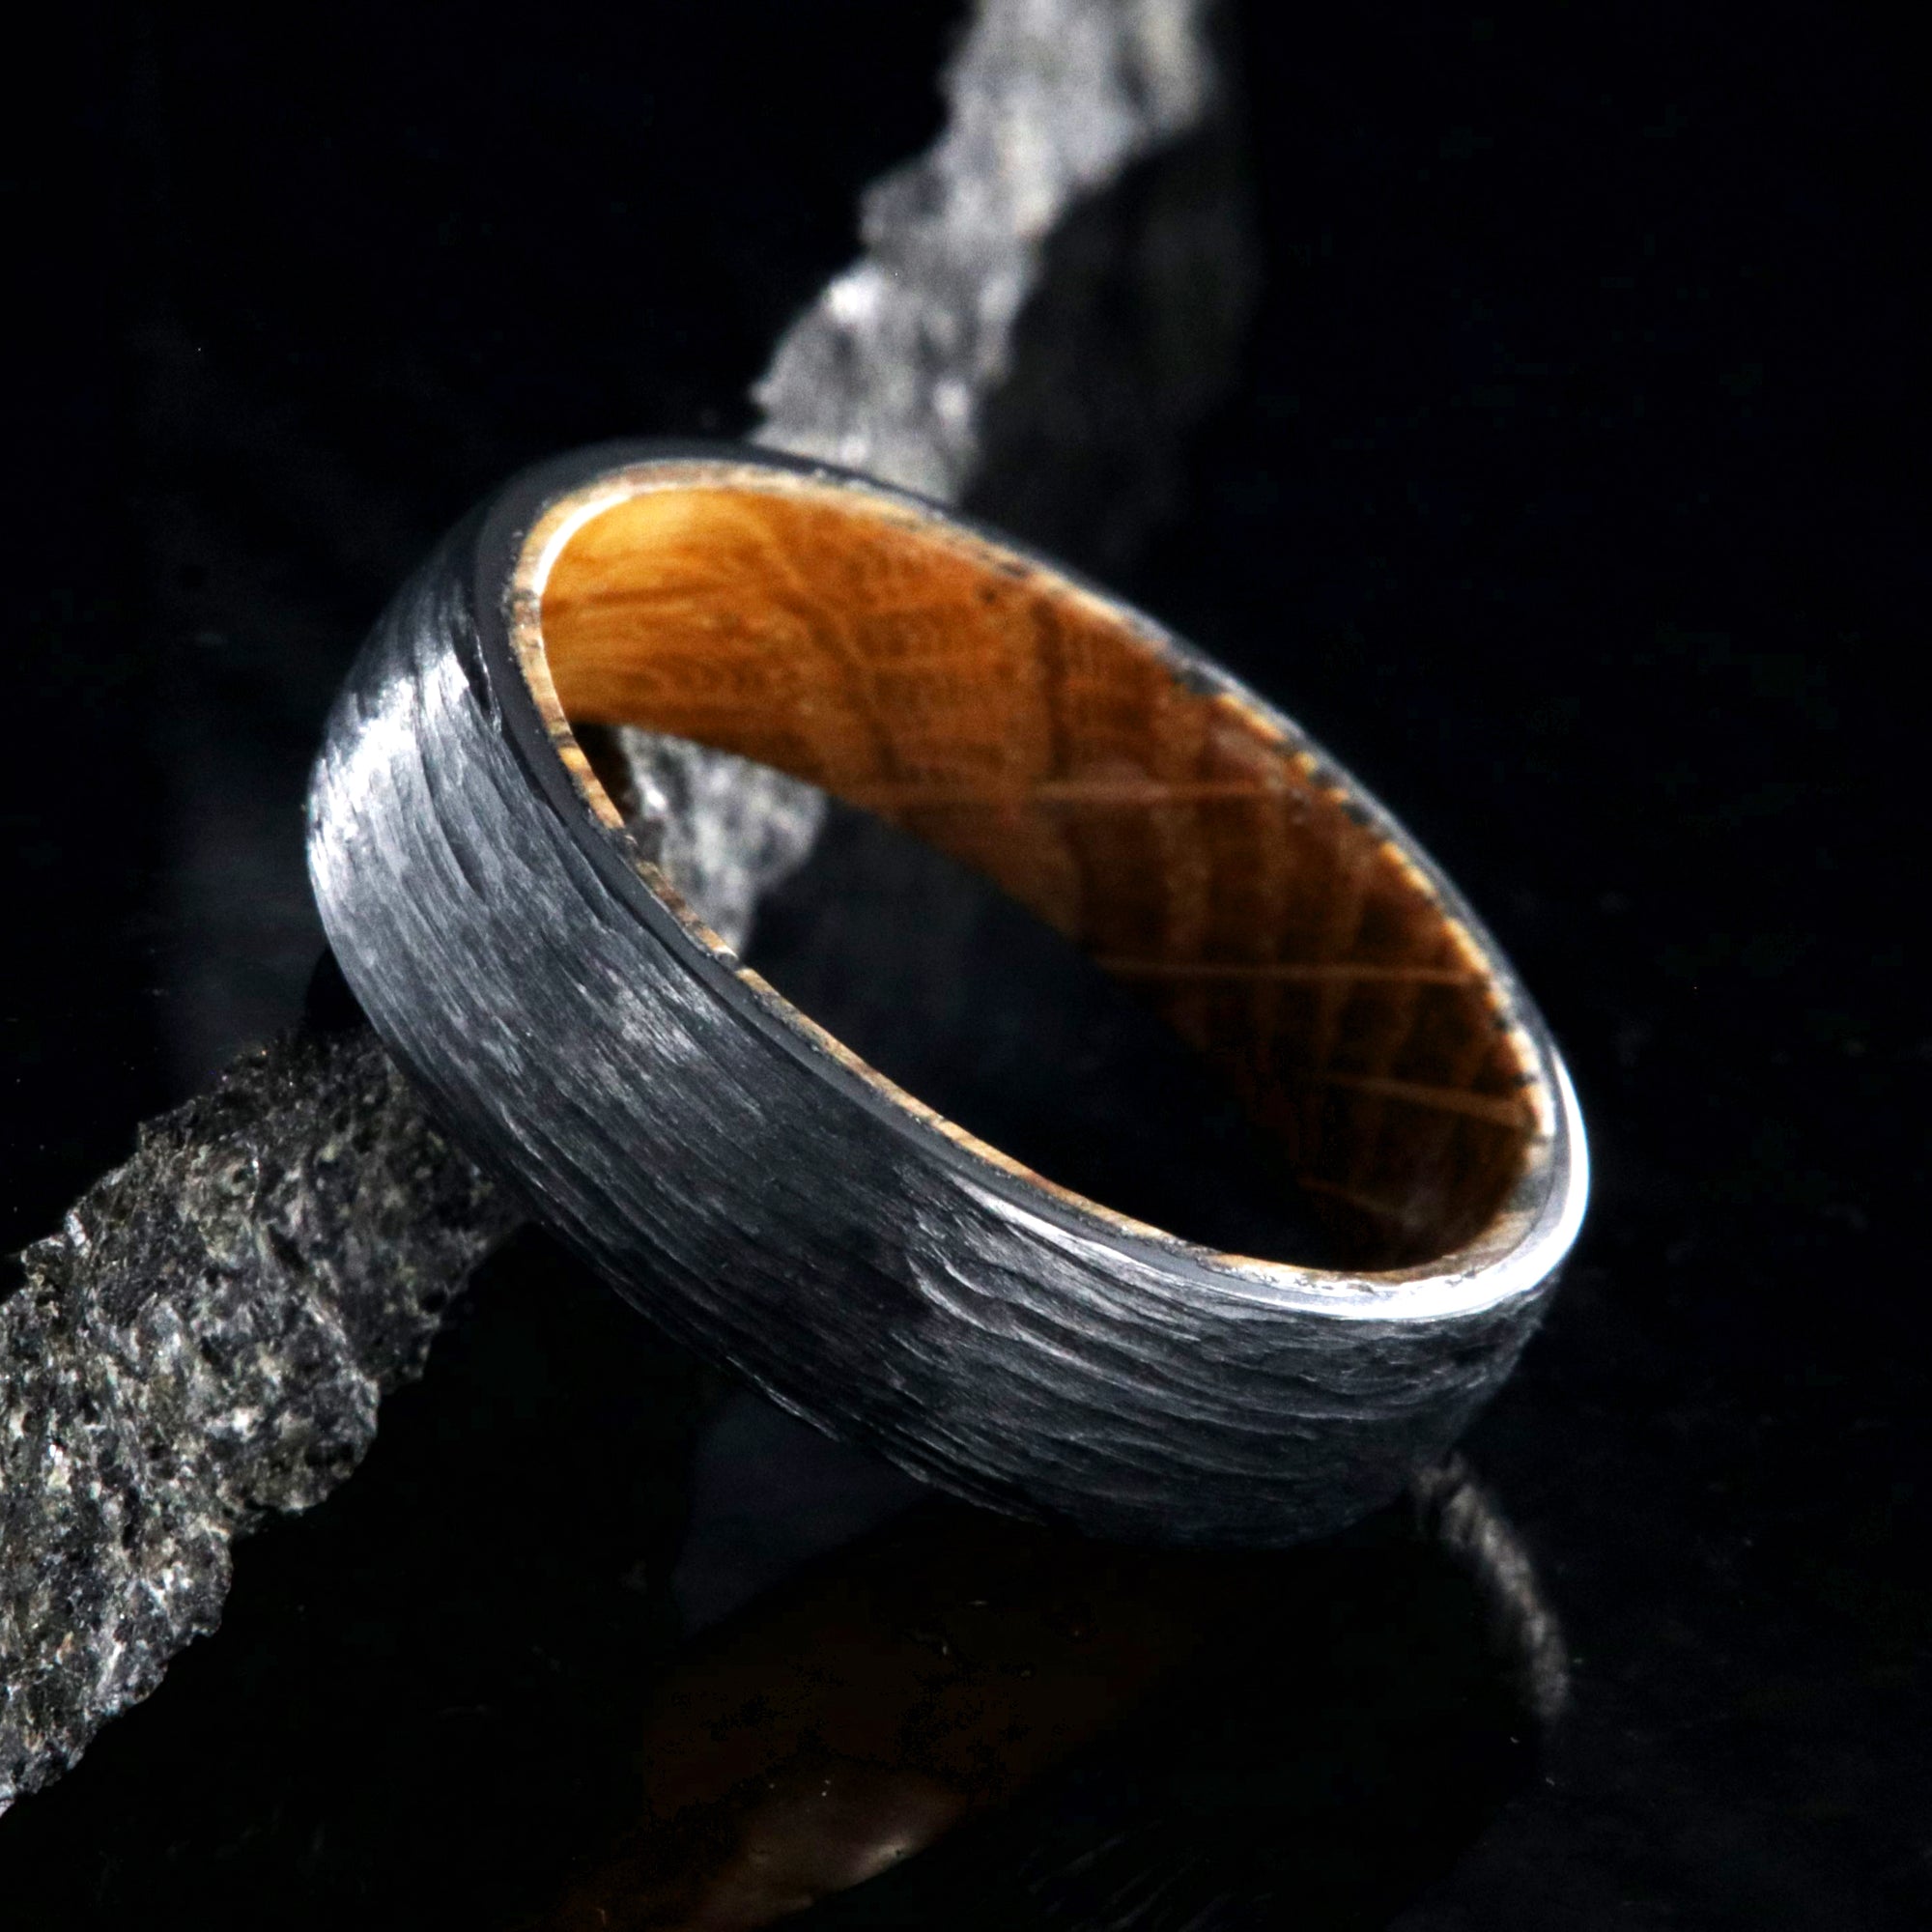 6mm wide black zirconium wedding band with a tree bark finish, whiskey barrel sleeve, and rounded profile